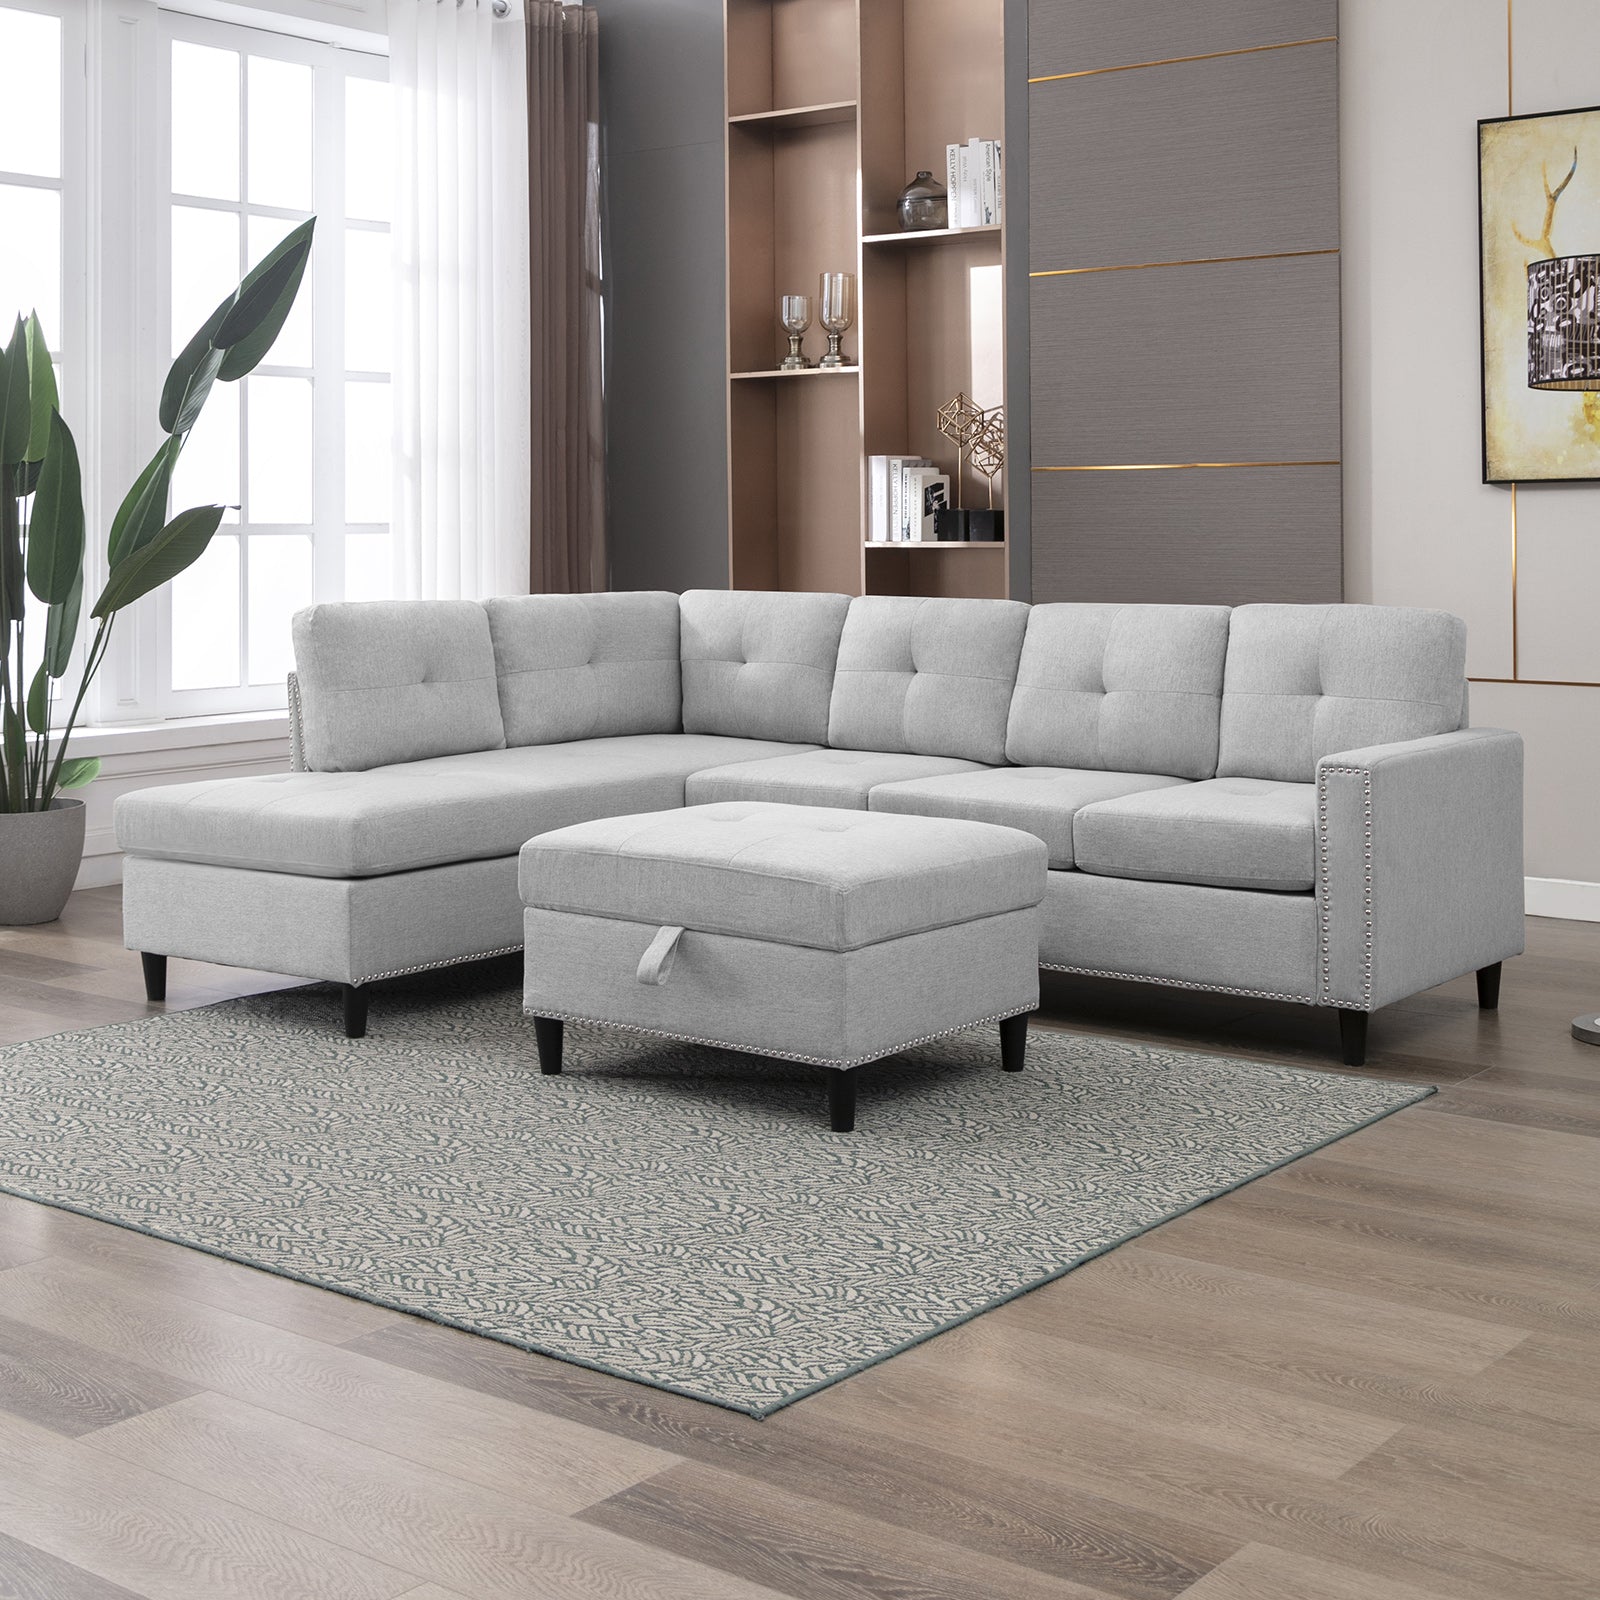 Mjkone Modern Upholstered Sectional Sofa with Ottoman